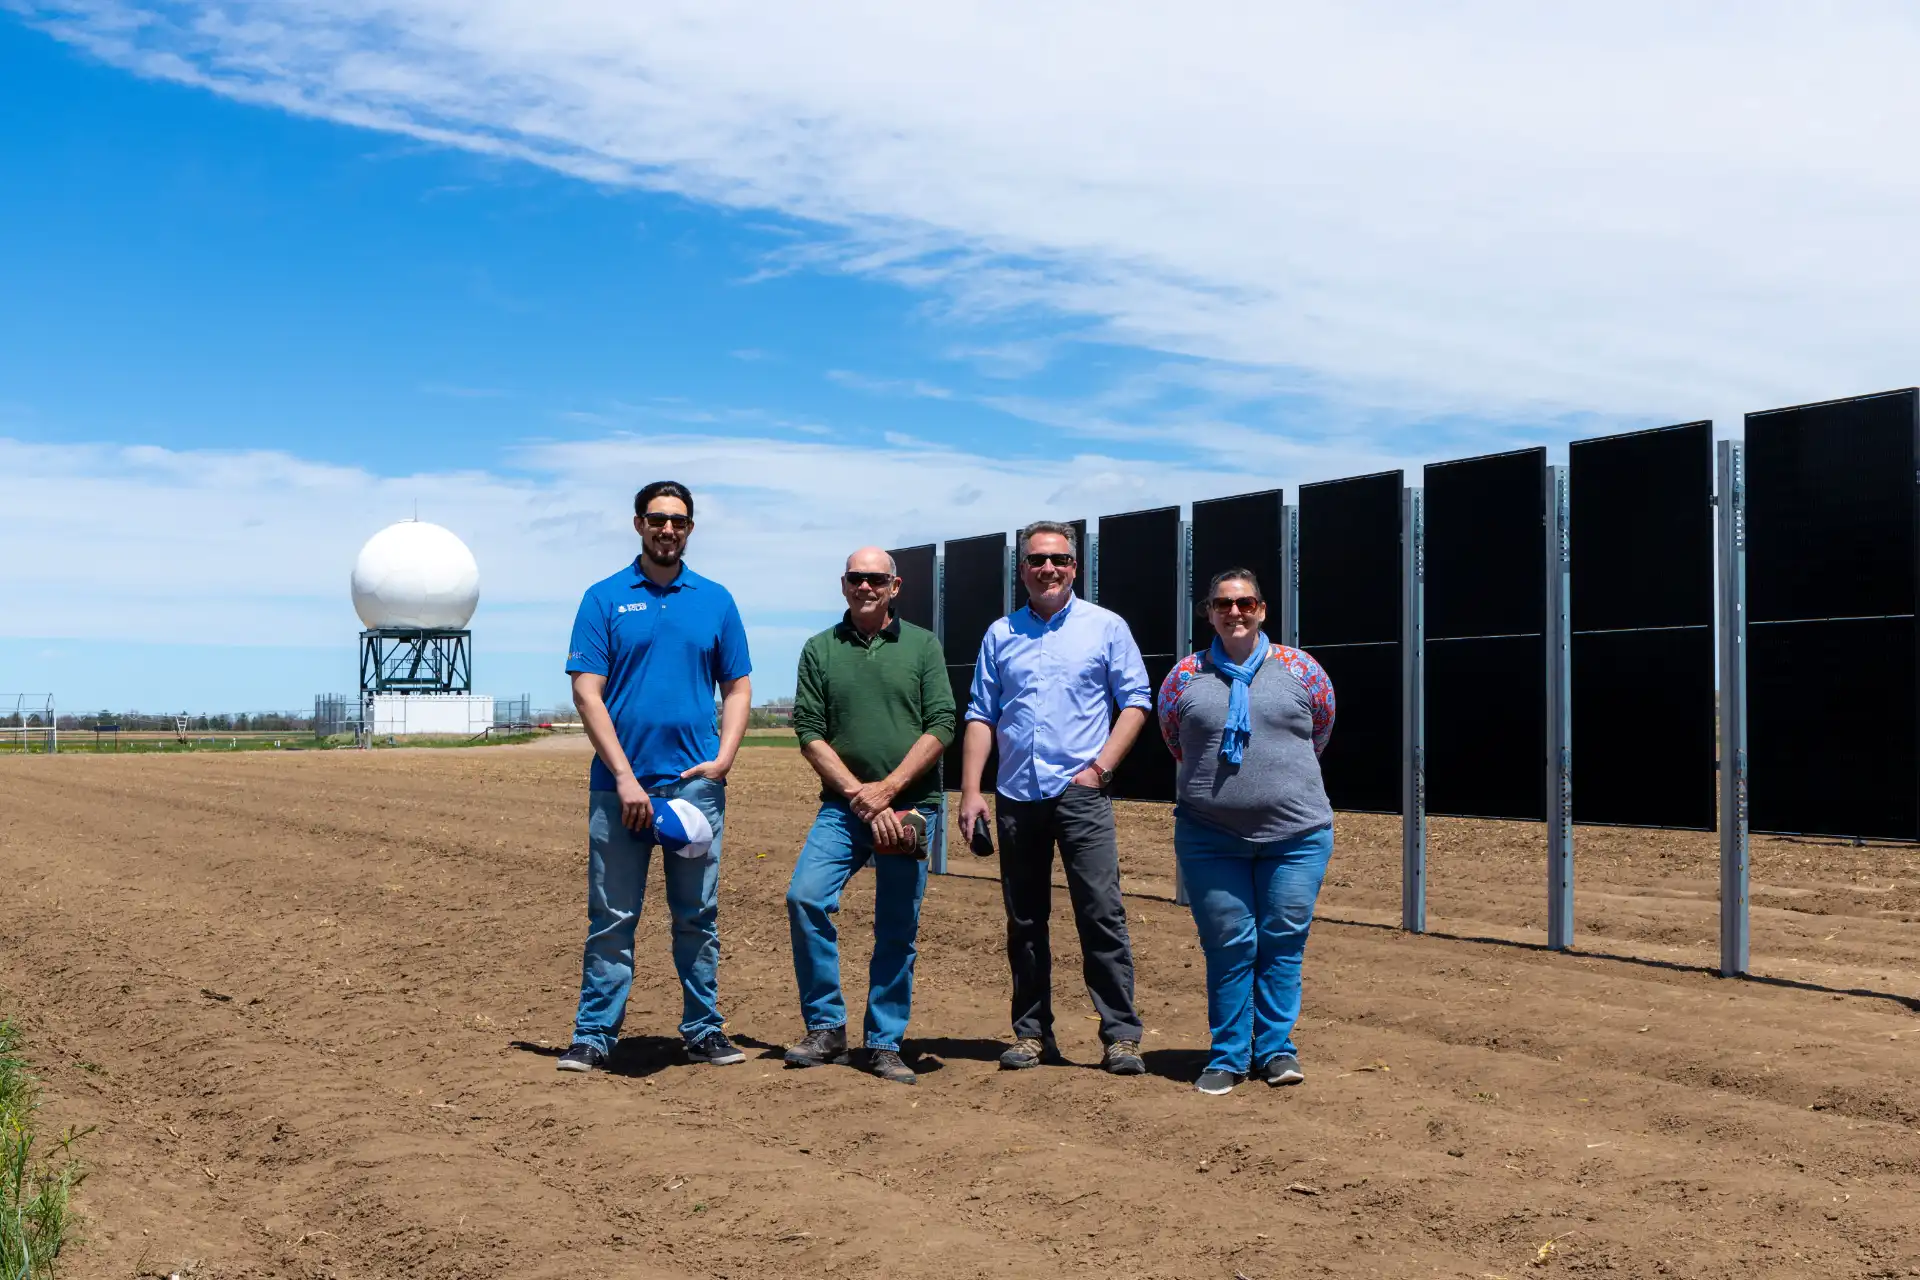 Sandbox Solar CSU Agrivoltaics Testing Grounds